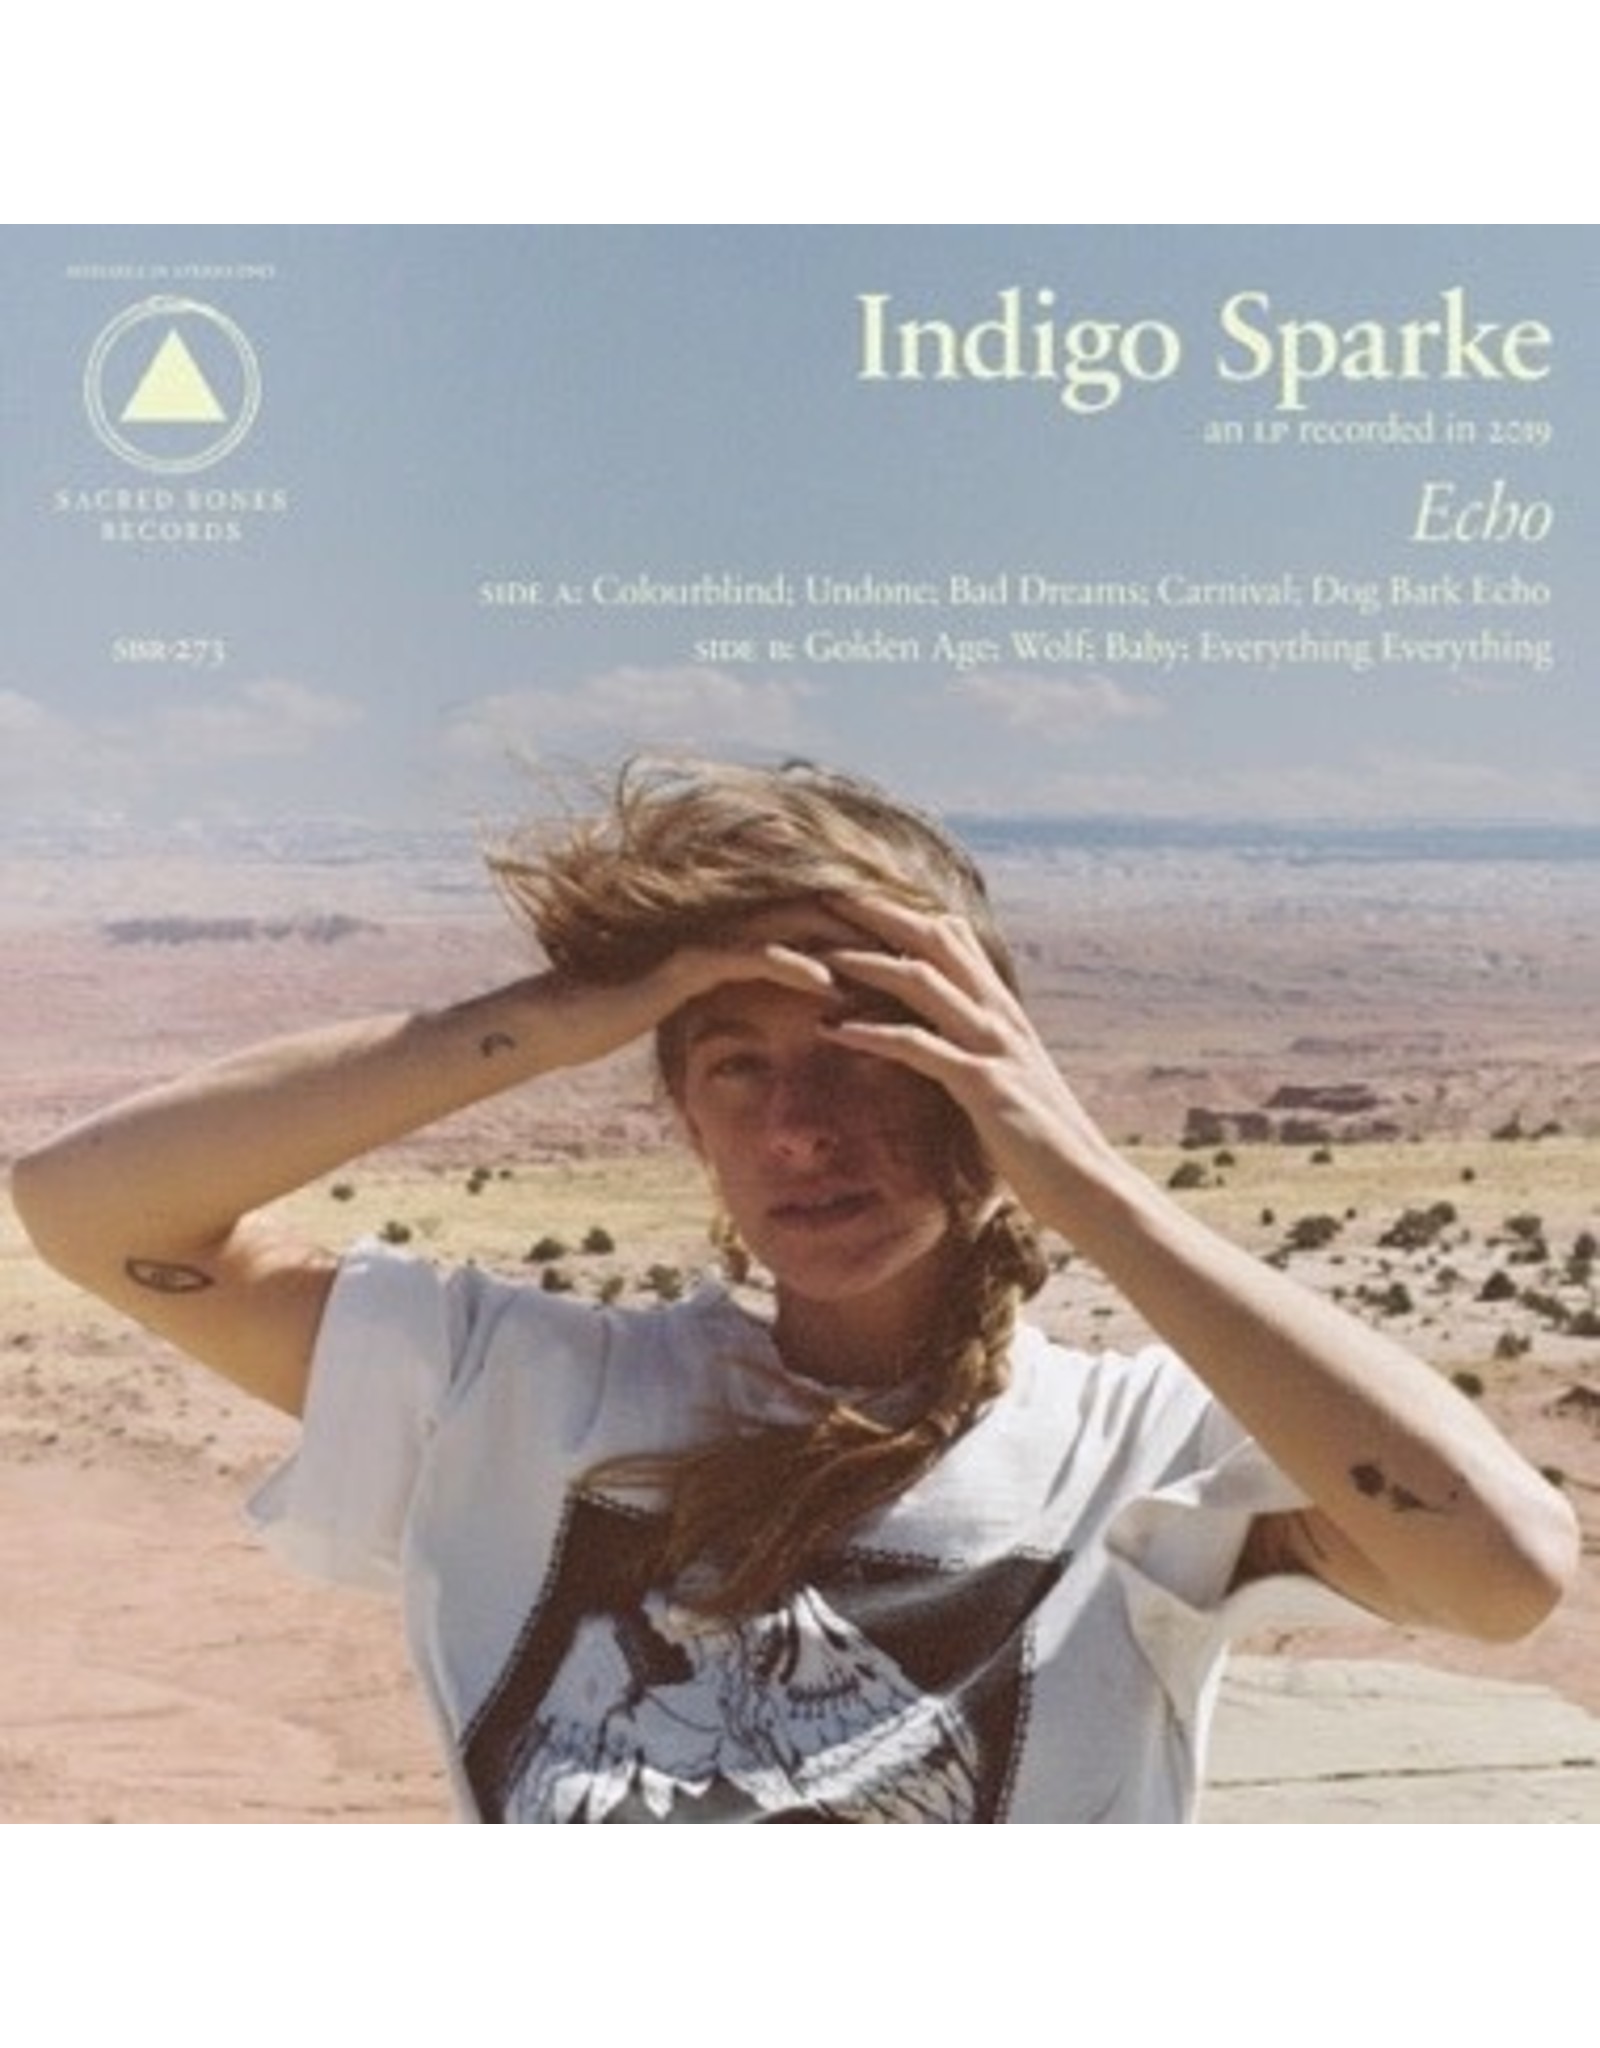 New Vinyl Indigo Sparke - Echo (Colored) LP